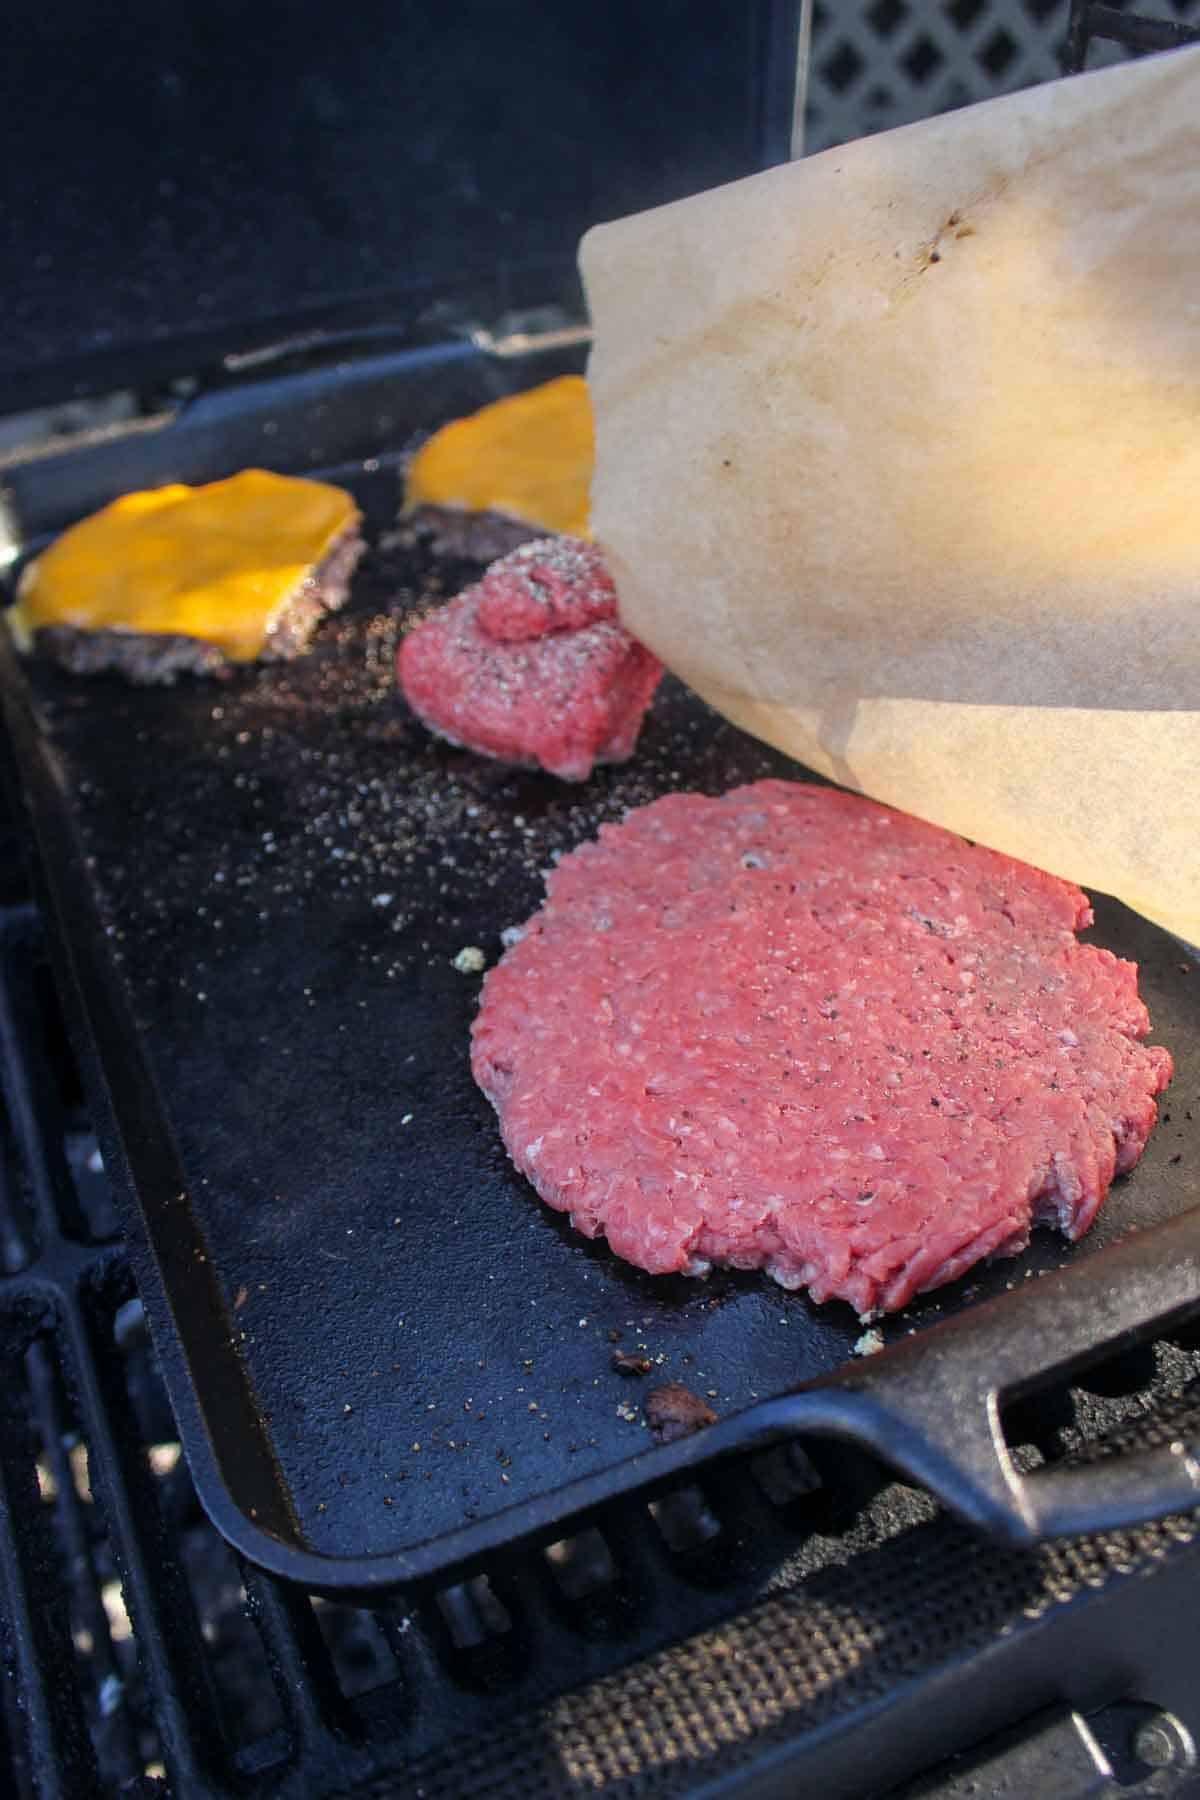 Smashing the burger patties to form the smash burgers.